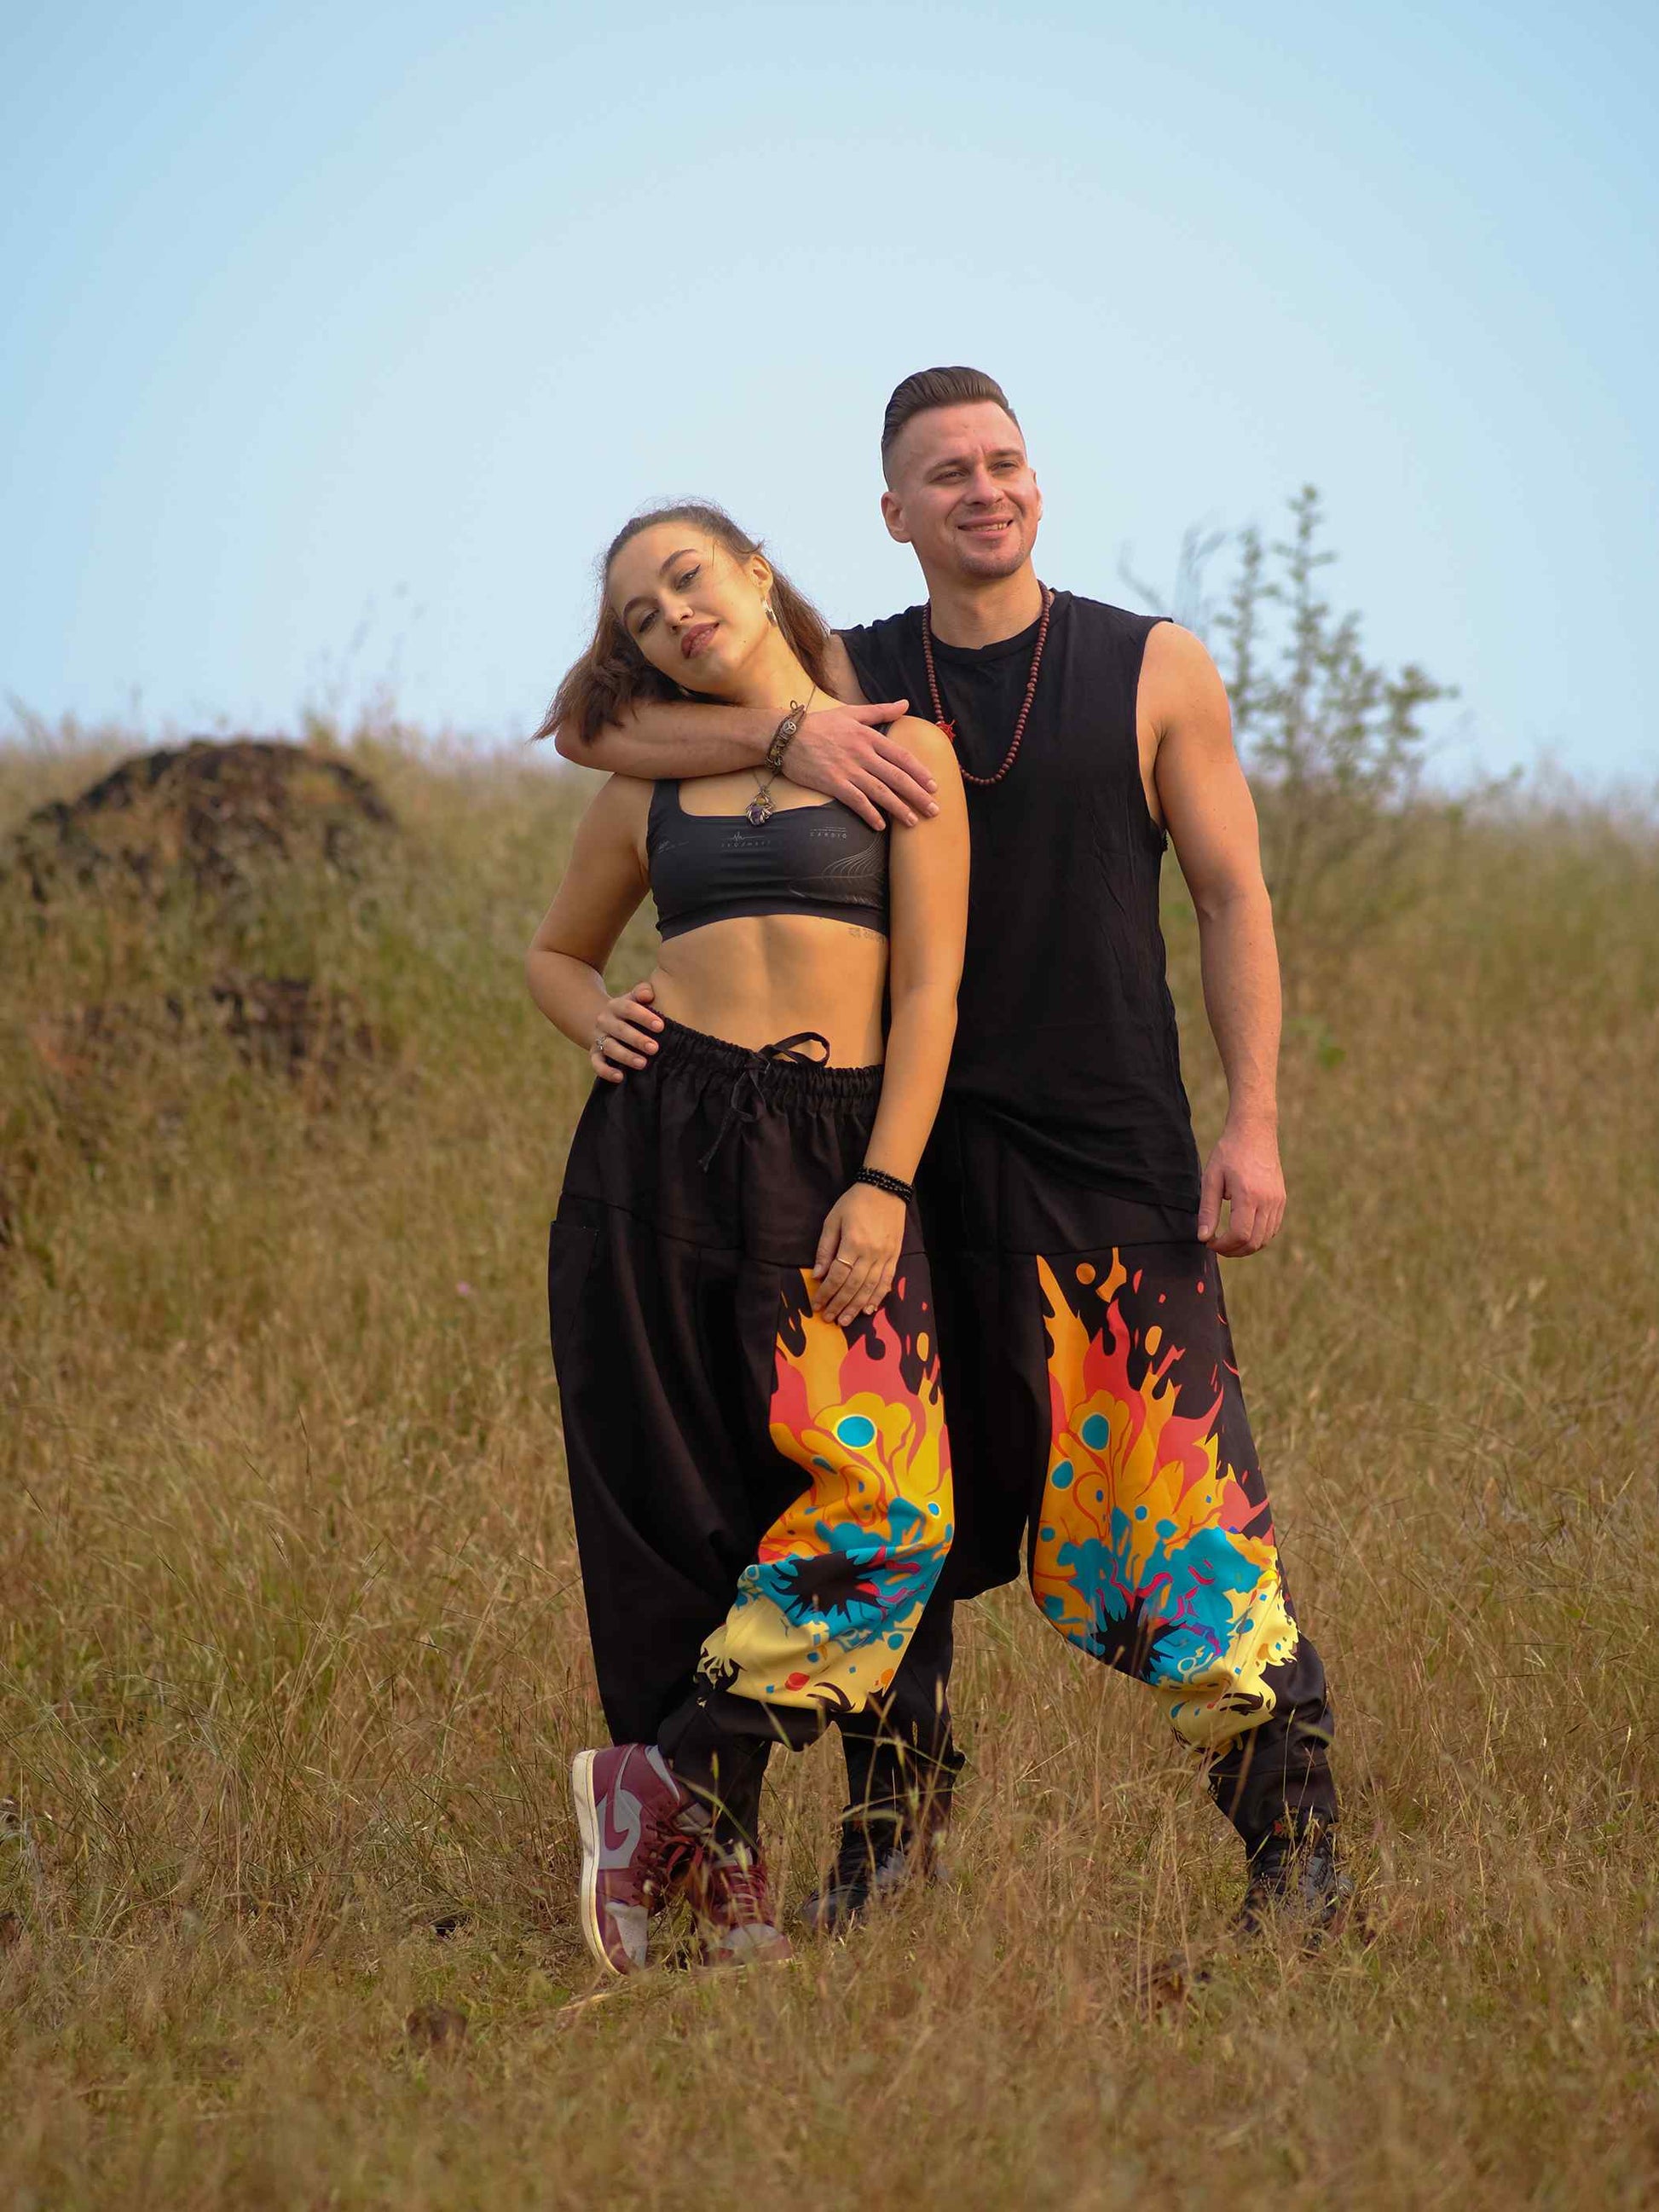 Buy Men's Lion Print Groove Dance Harem Pants For Travel Dance Yoga